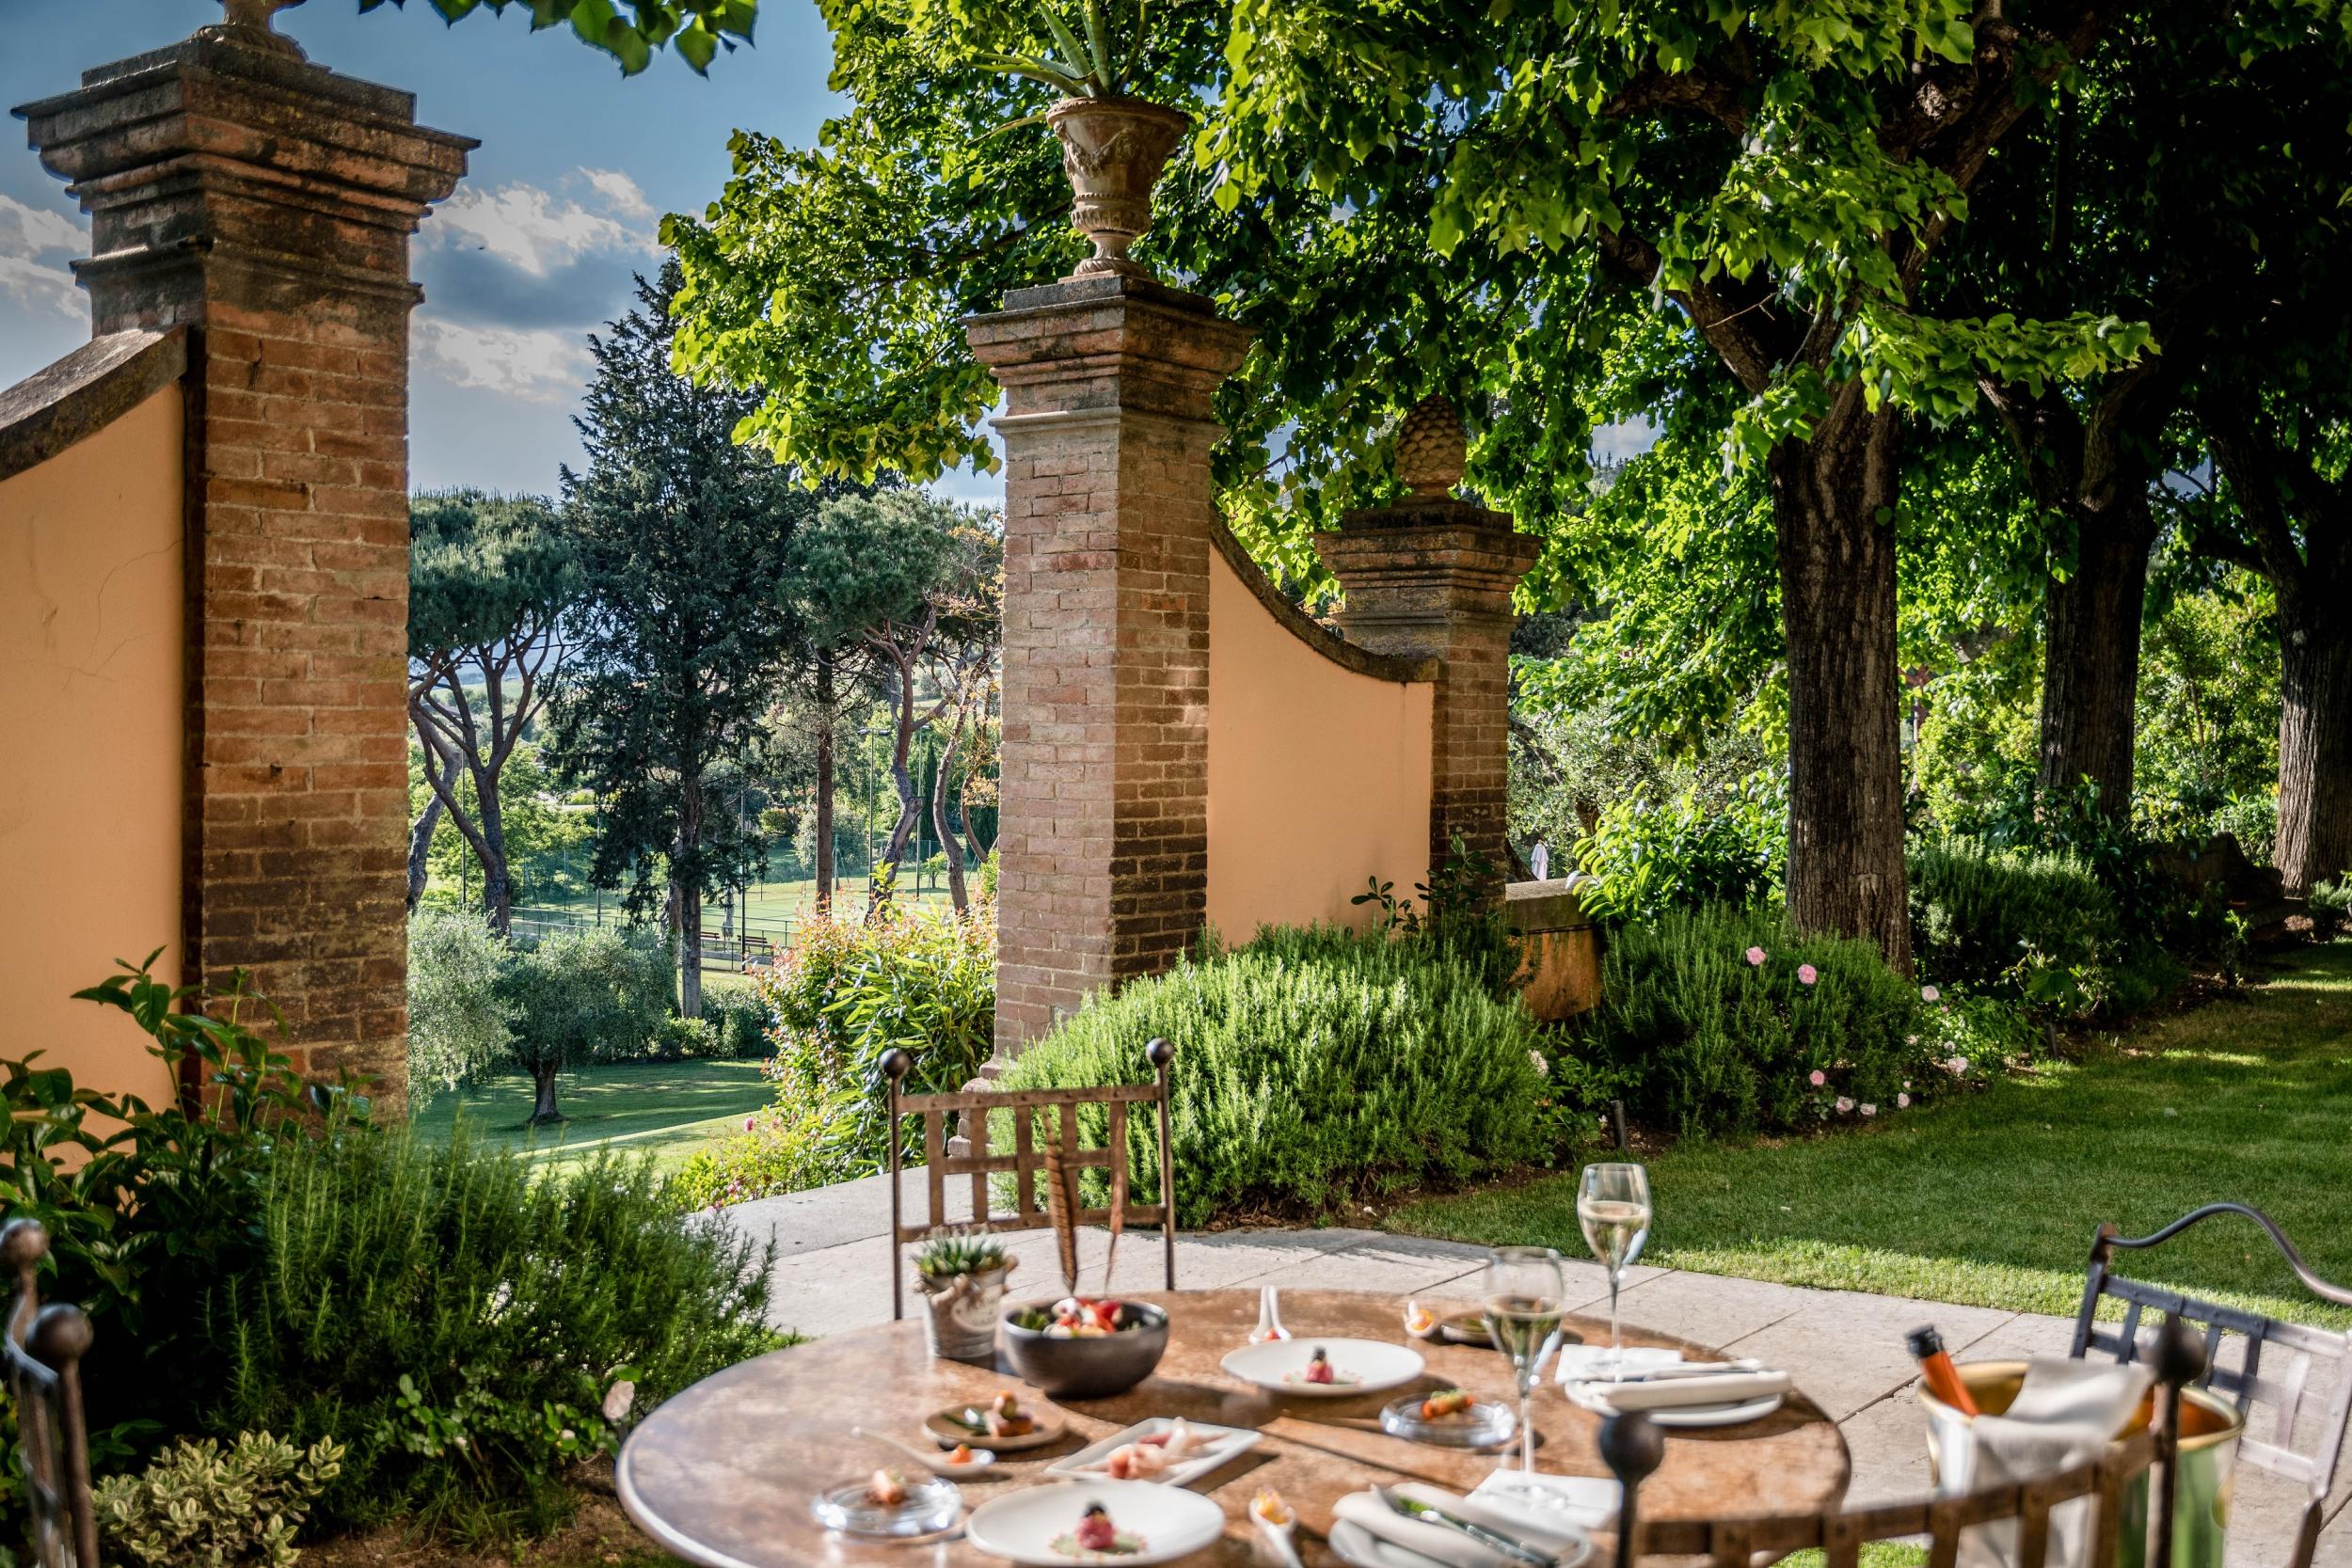 Sample award-winning wines and stunning views in Tuscany (Gianni Buonsante)